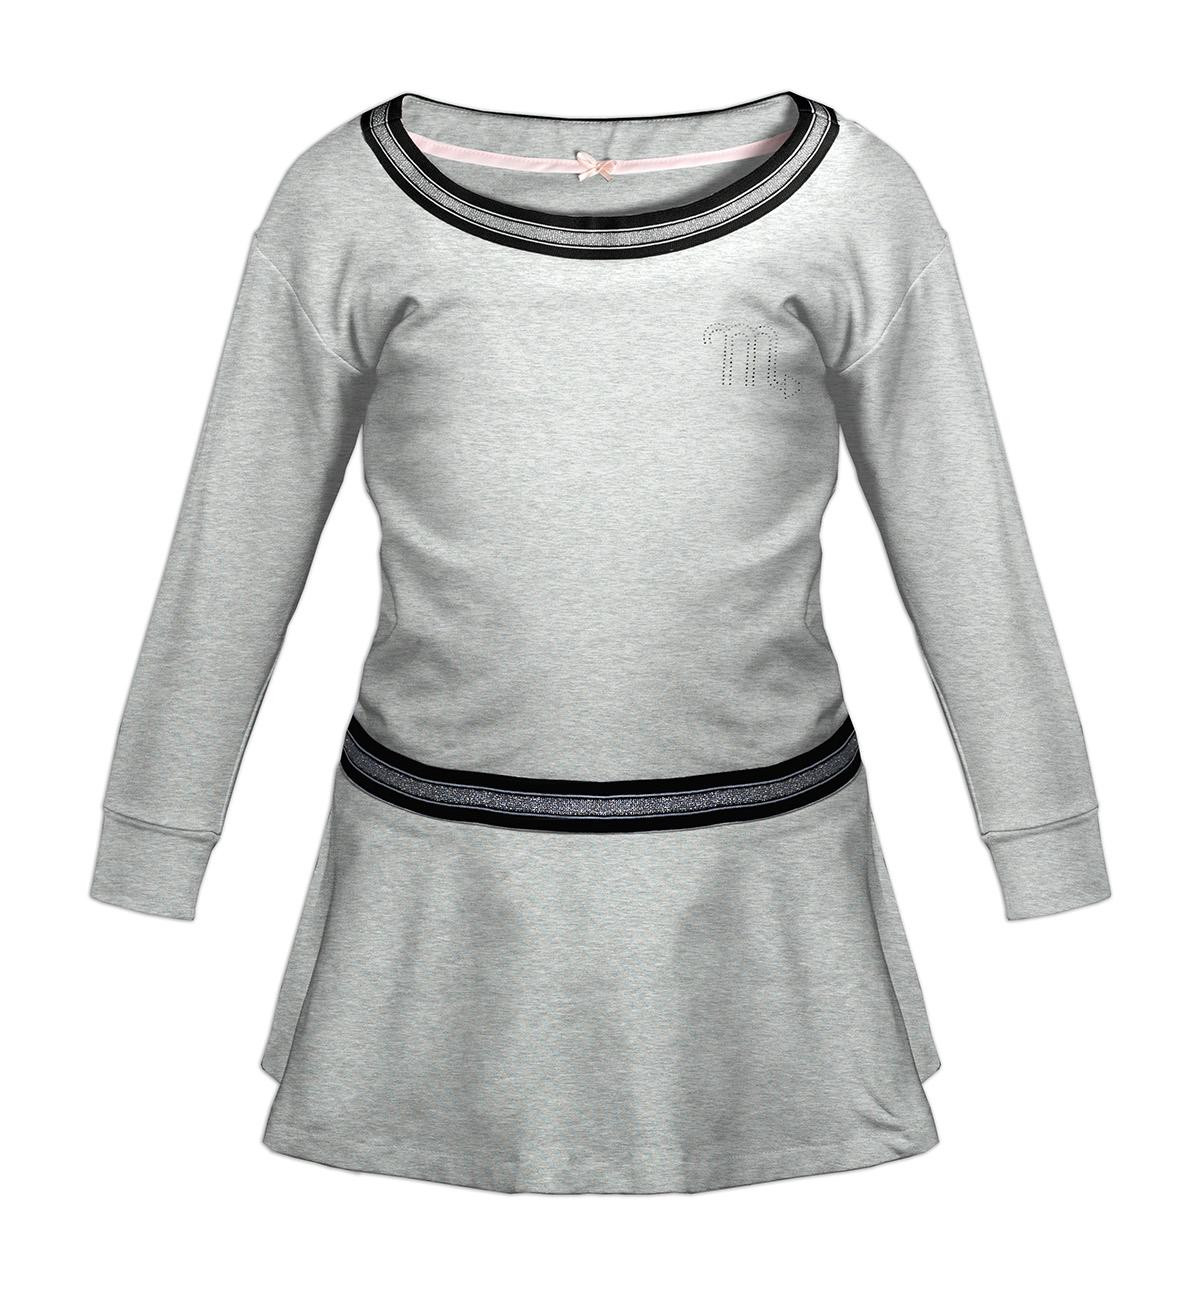 Peplum kid’s blouse with transfer rhinestones (ANGIE) - melange light grey 110-116 - sewing set